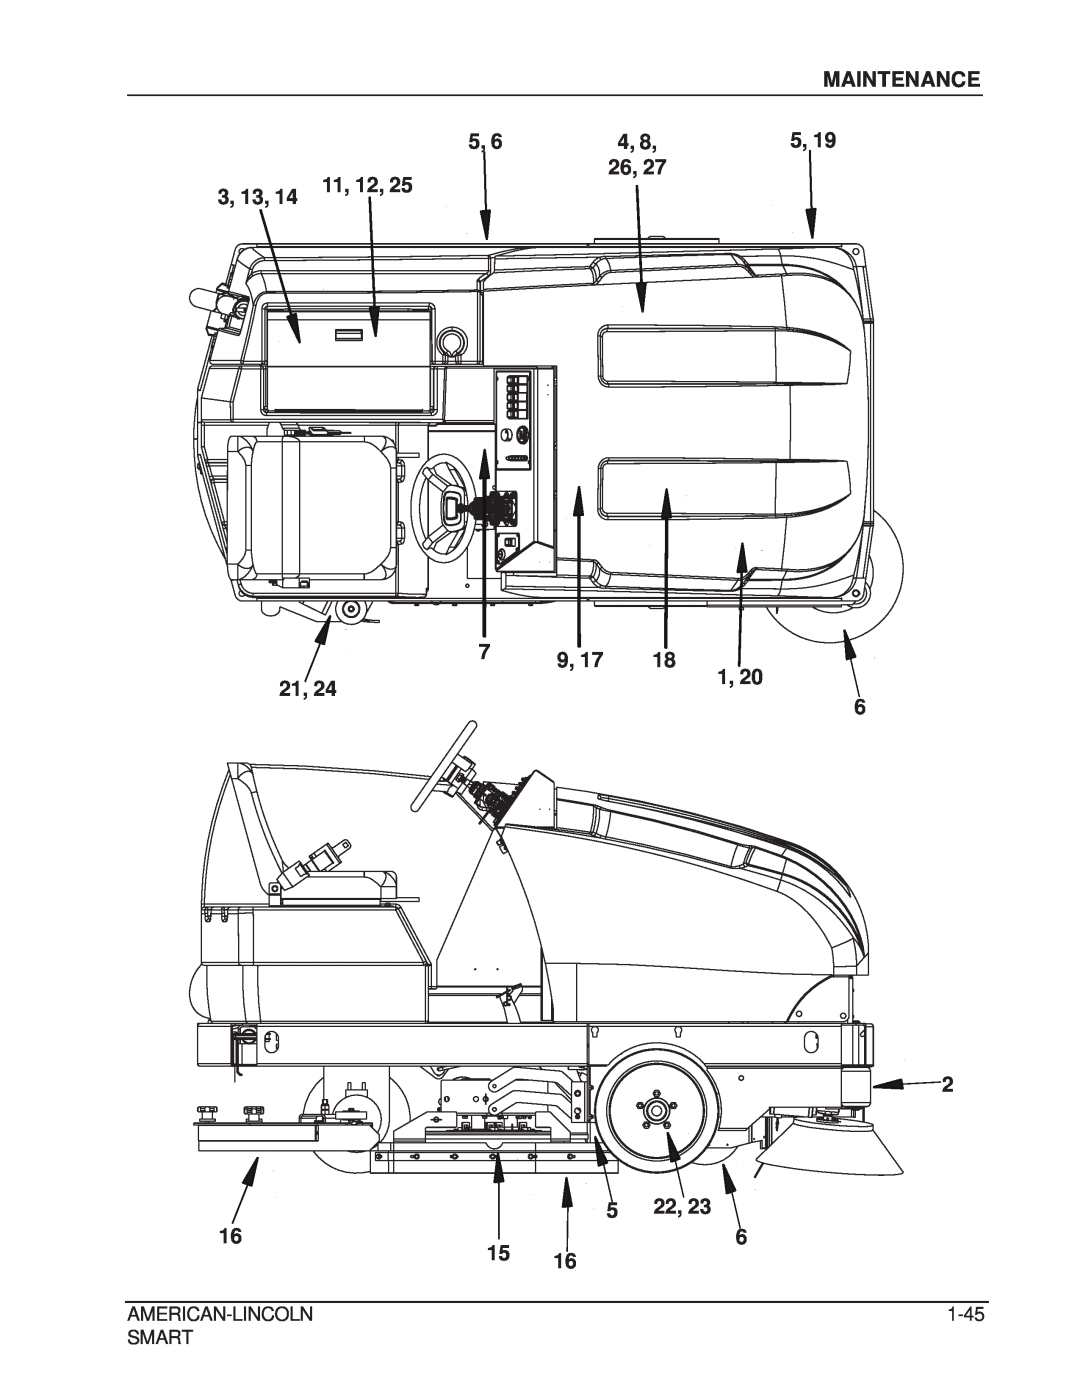 Nilfisk-ALTO 692003 manual 3, 13, Maintenance, 11, 12, American-Lincoln, 1-45, Smart 